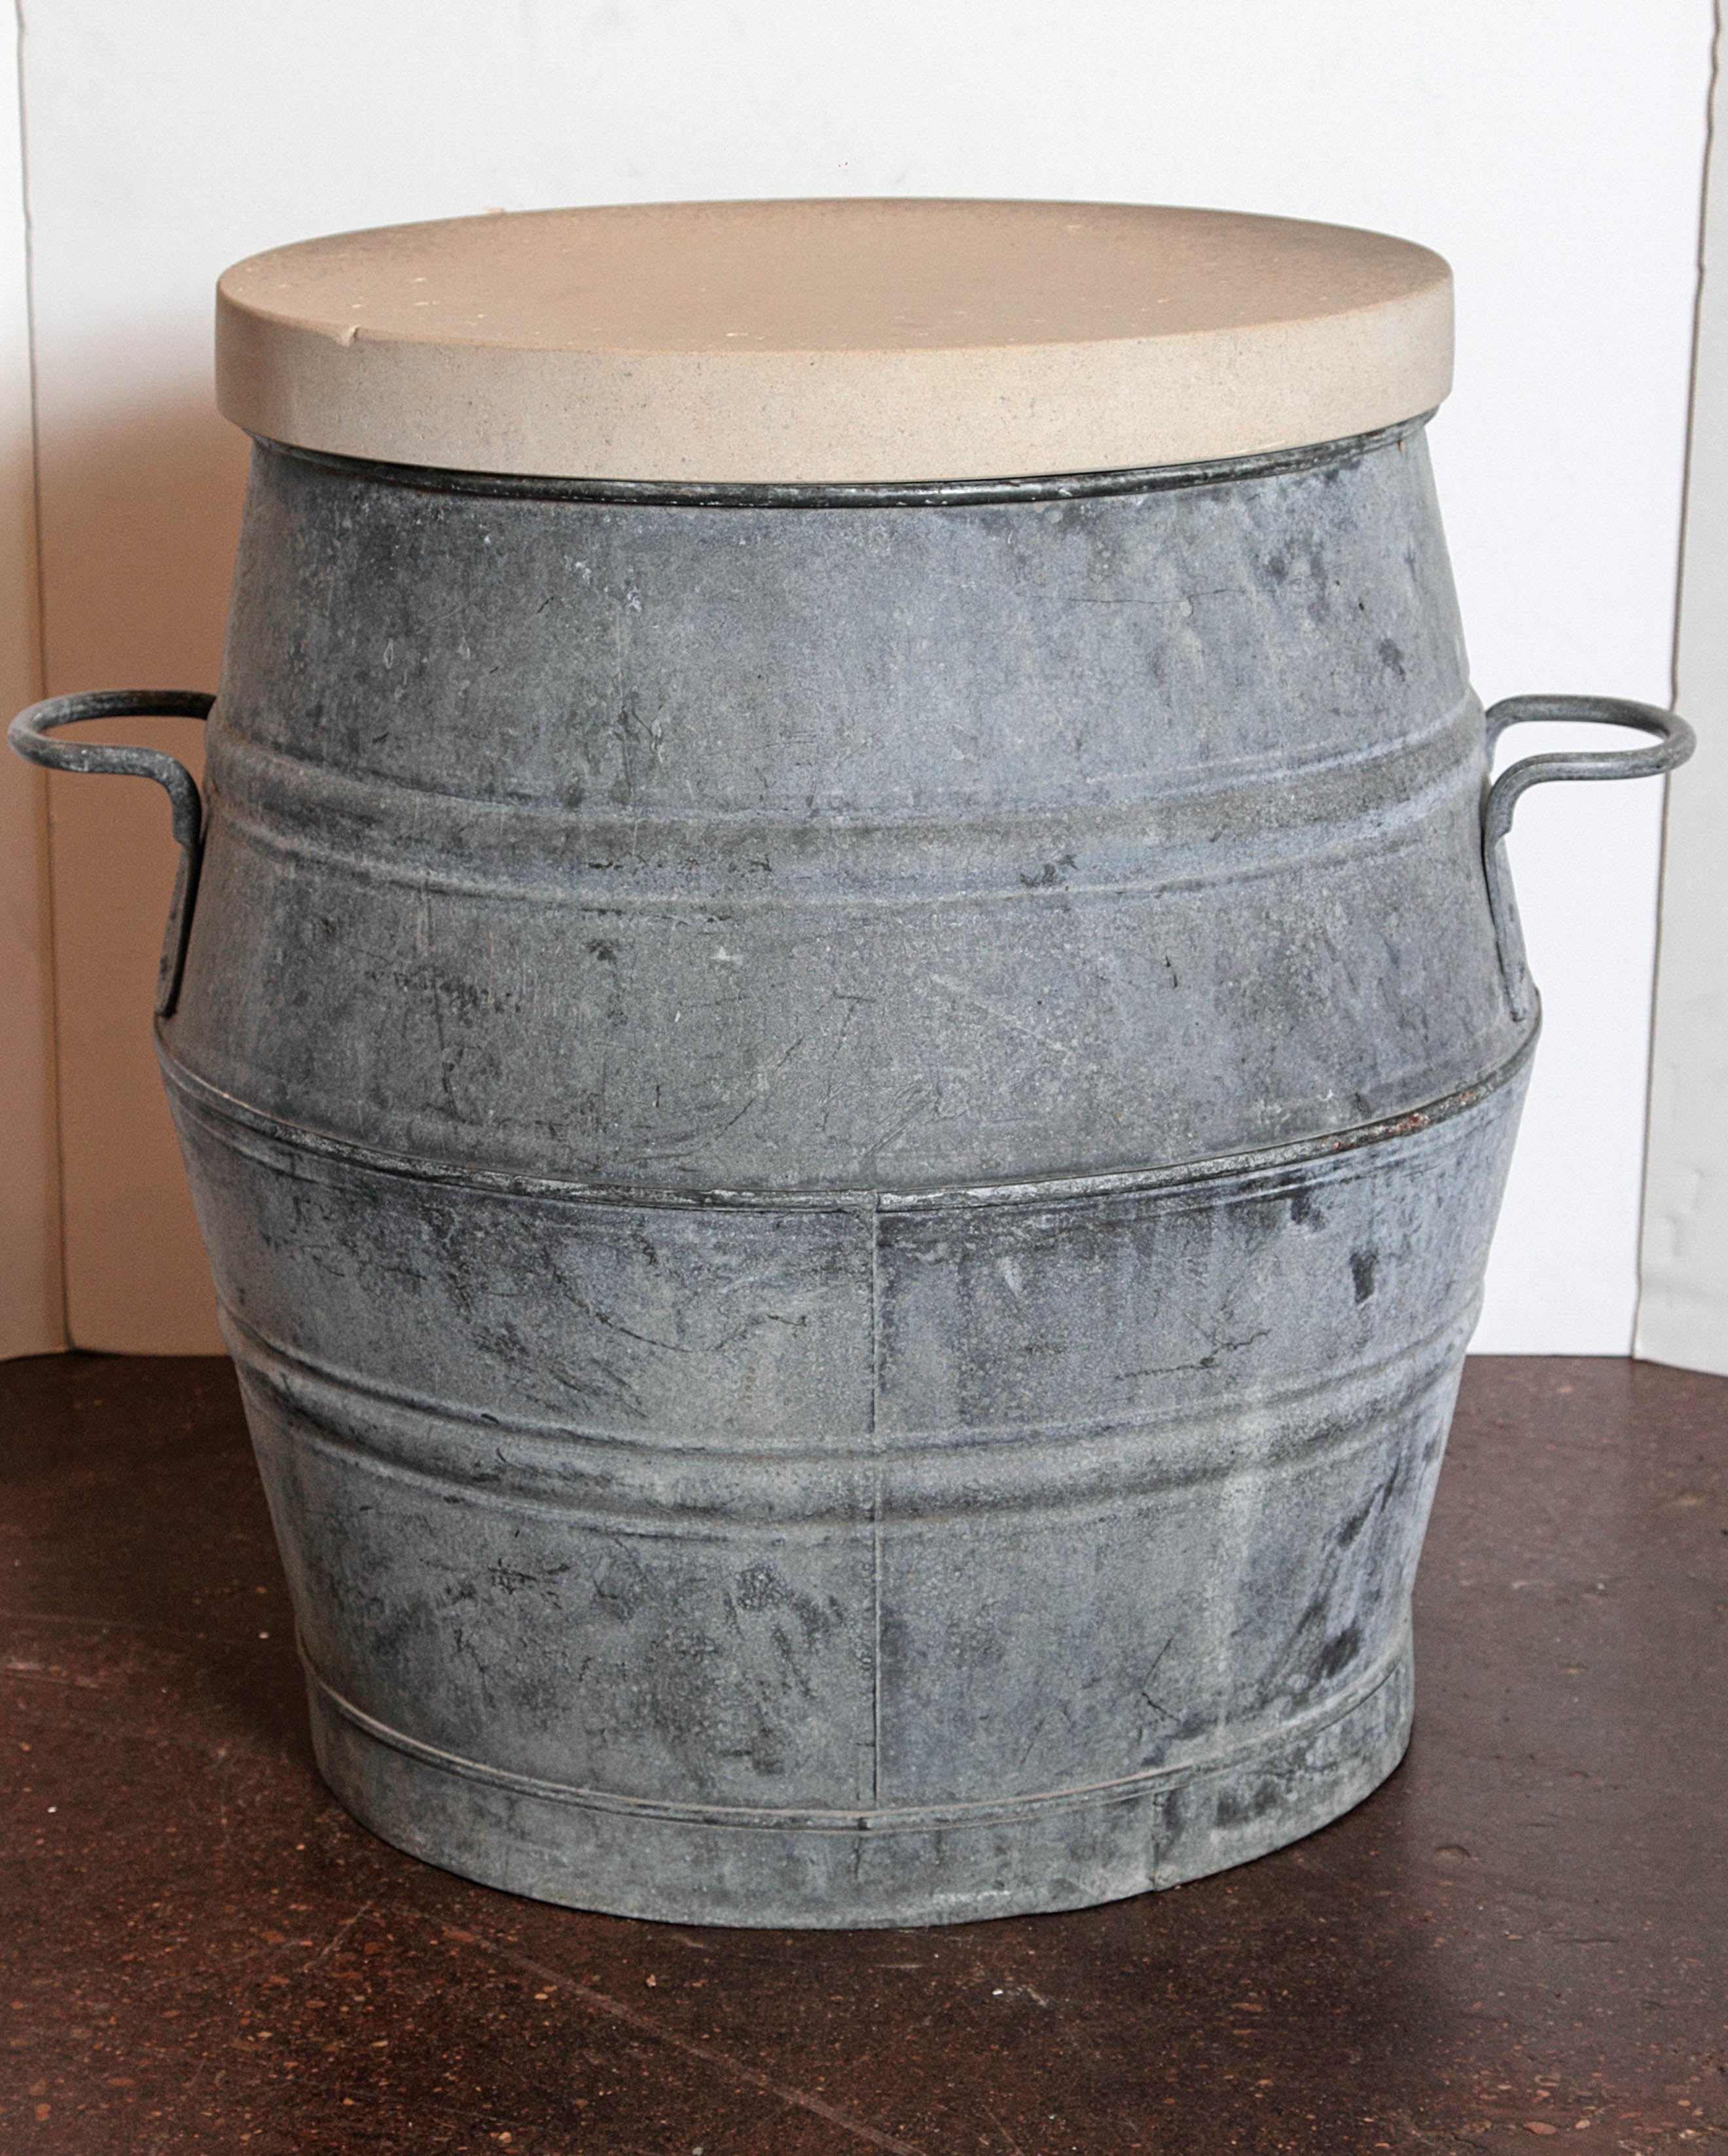 Galvanized Vintage Dolly Tub Barrel Side Table
2